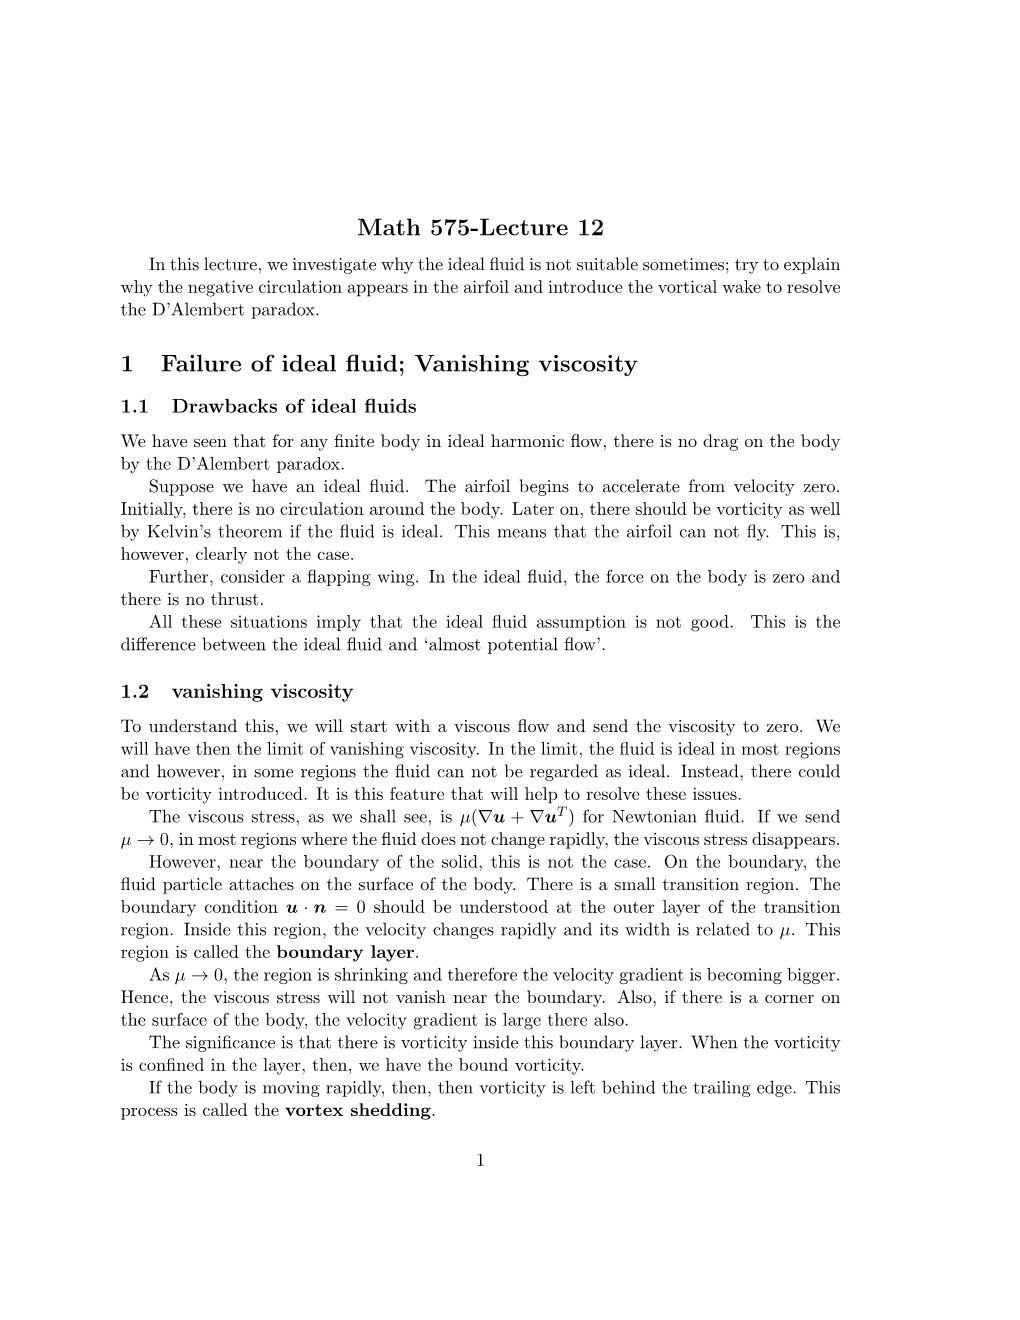 Math 575-Lecture 12 1 Failure of Ideal Fluid; Vanishing Viscosity